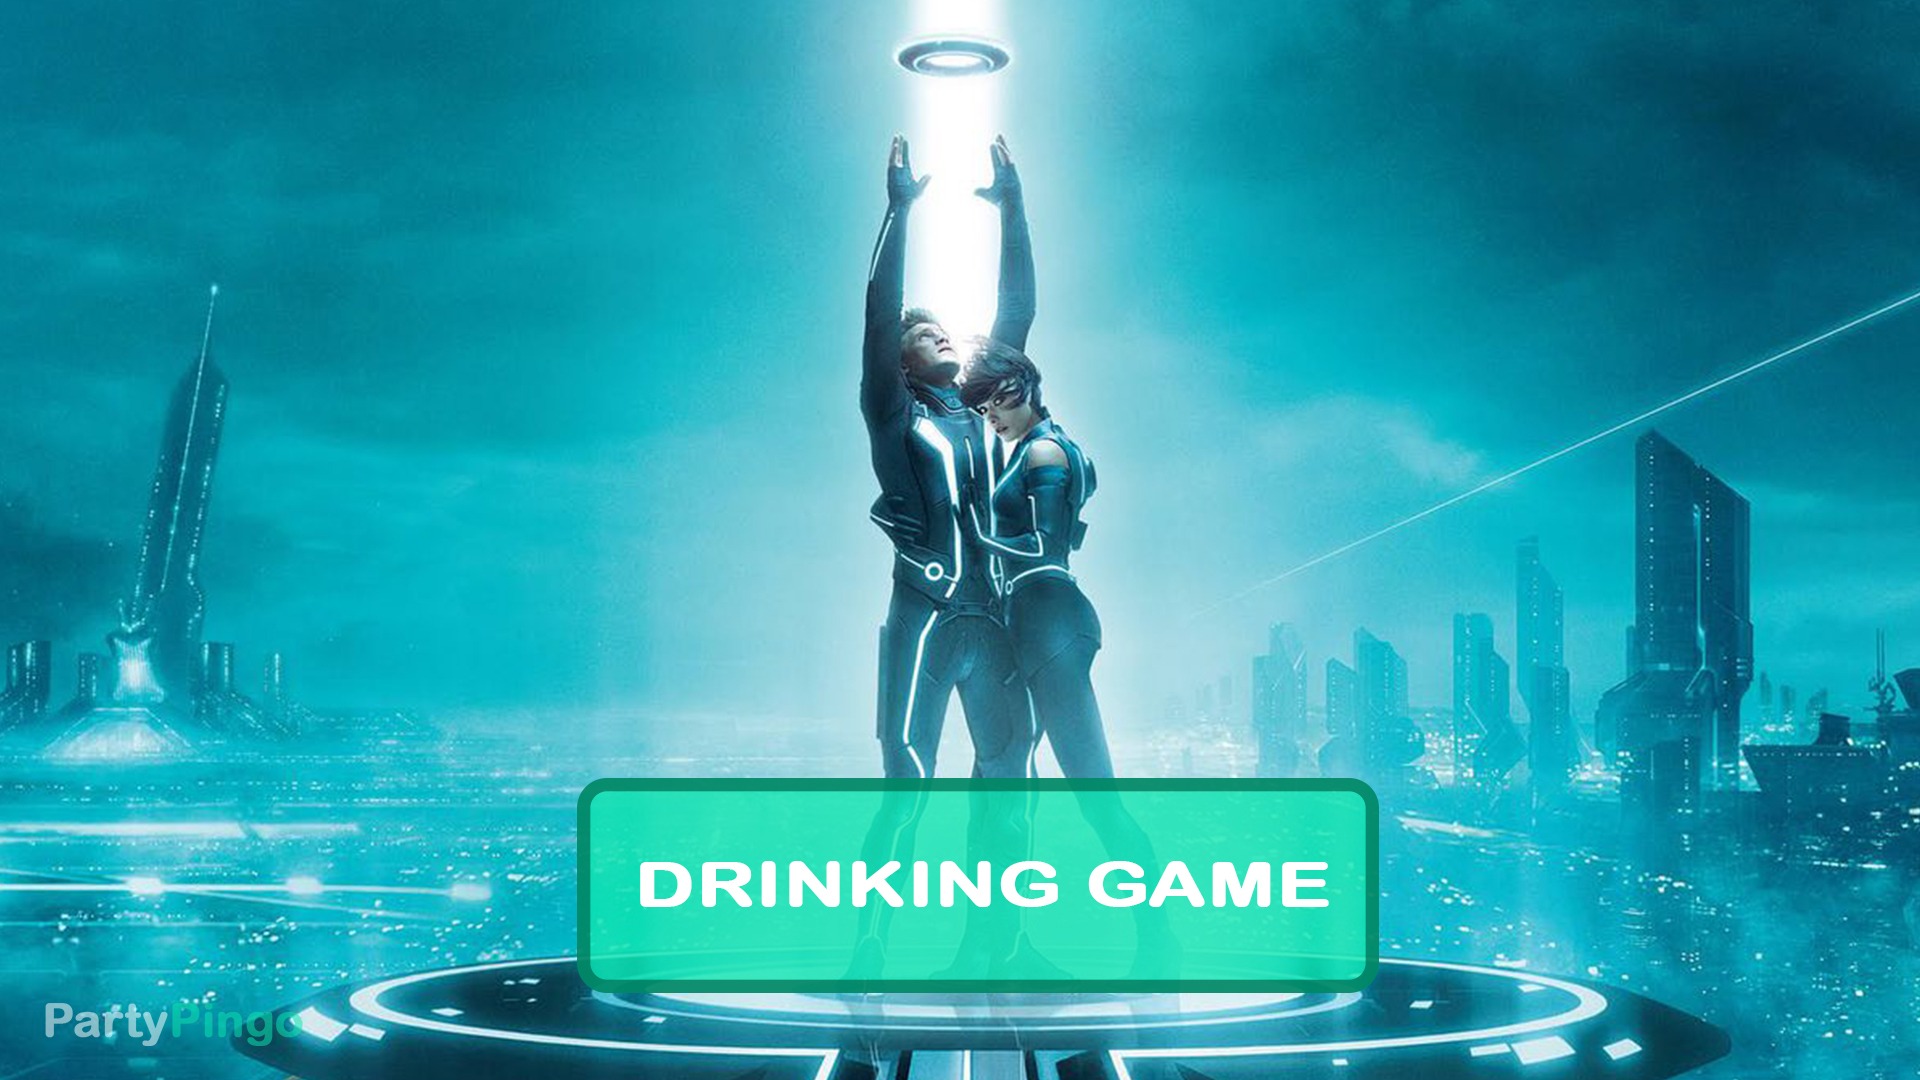 Tron - Legacy Drinking Game